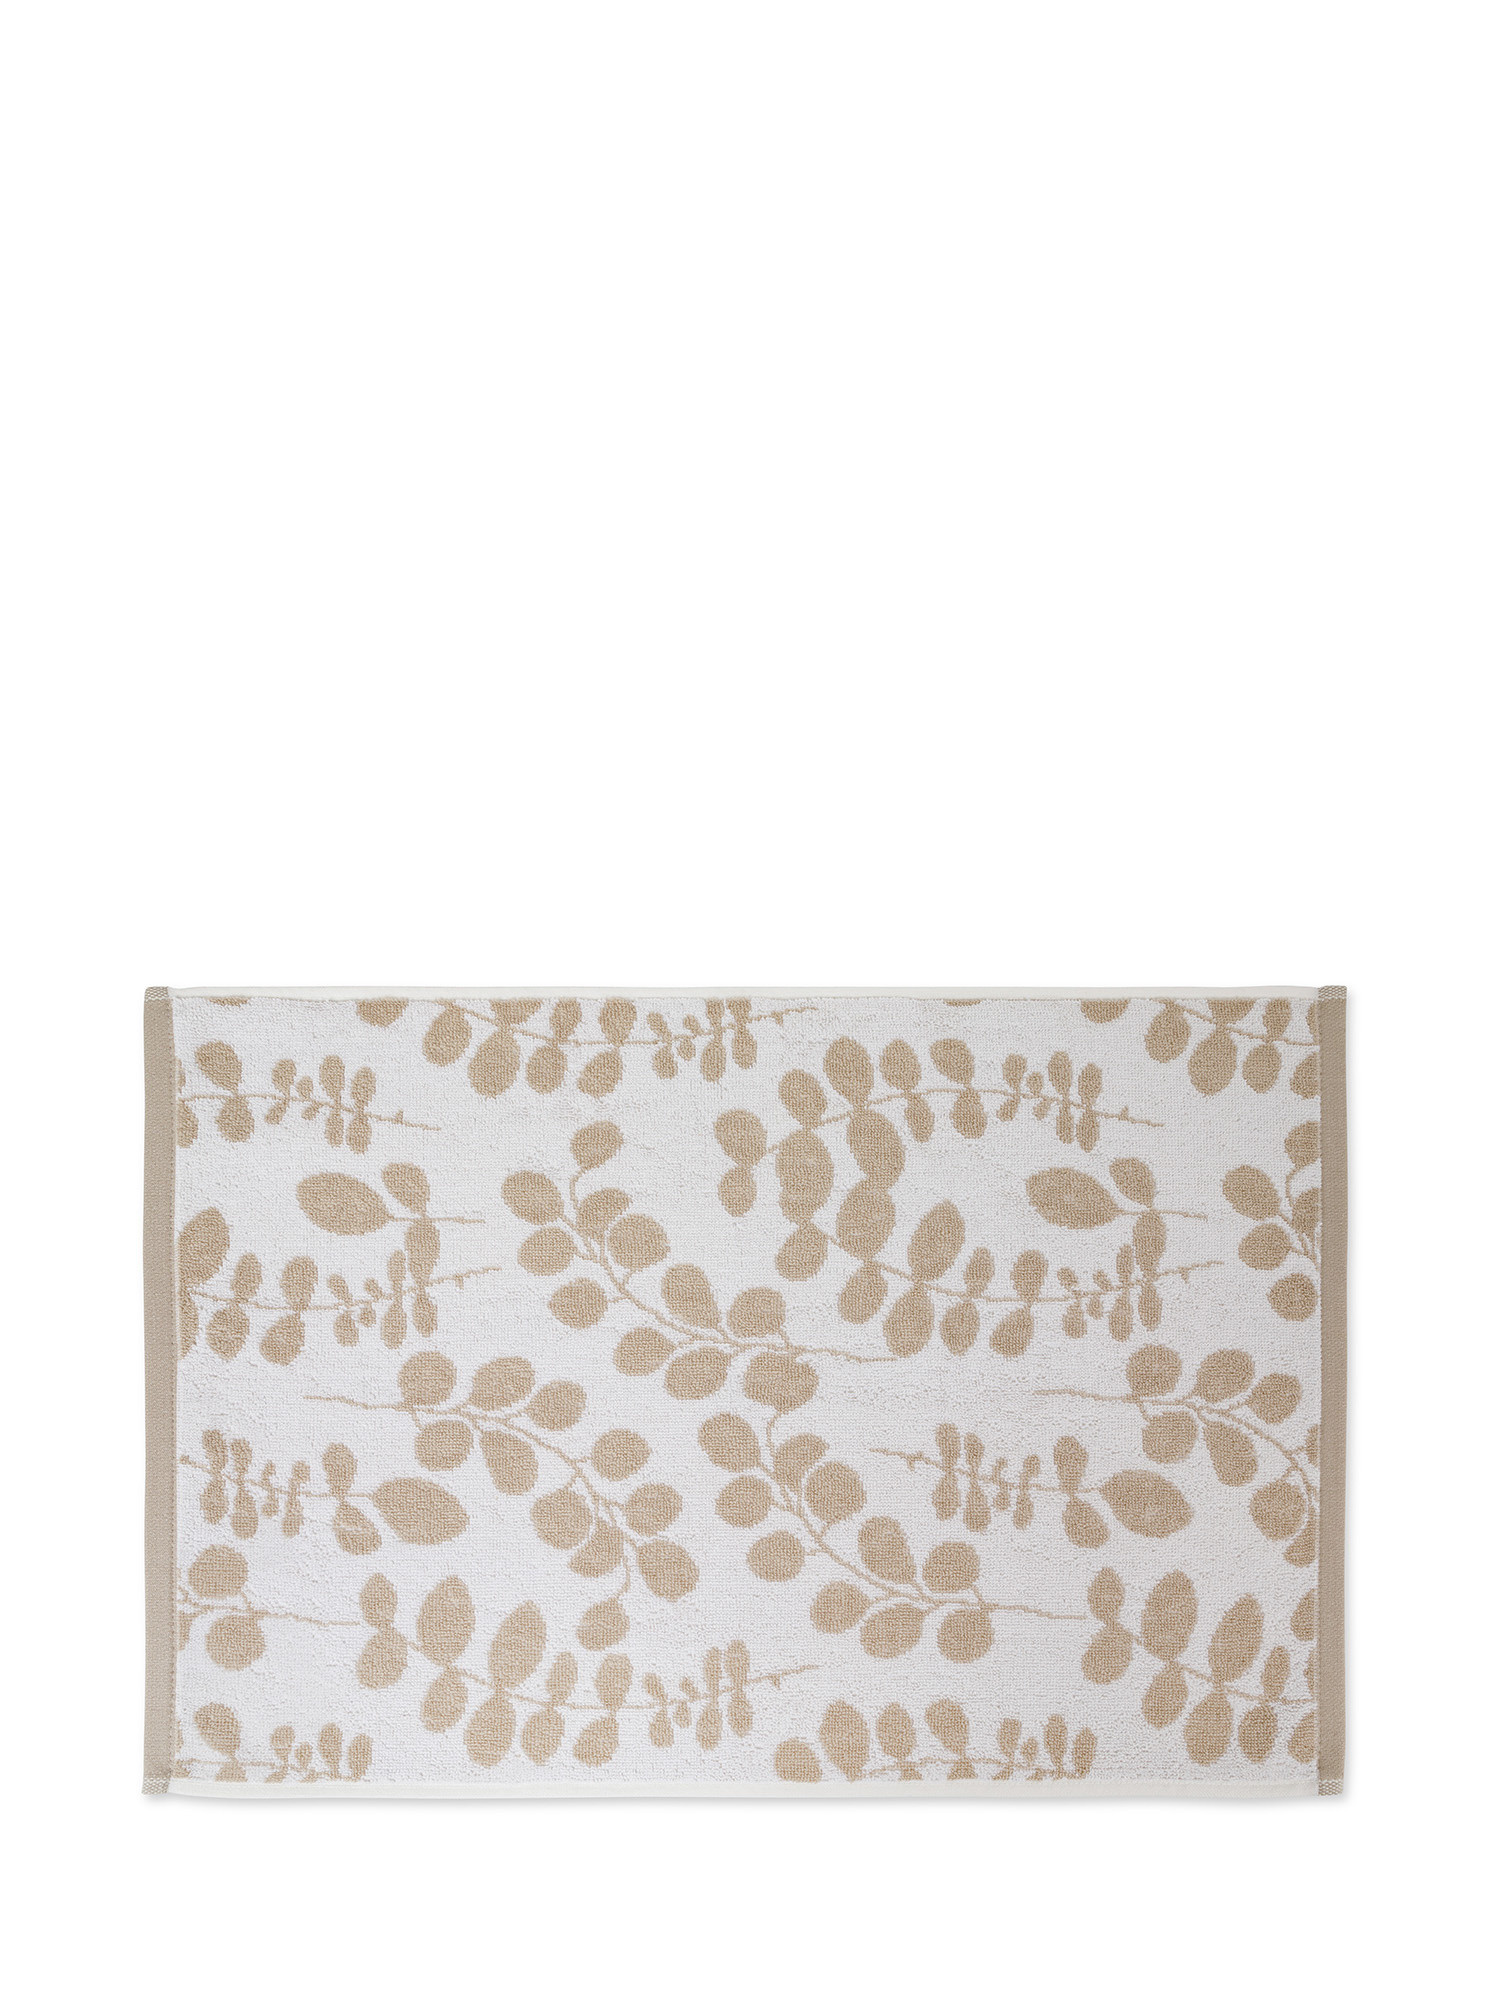 Foliage motif cotton terry towel, Beige, large image number 1